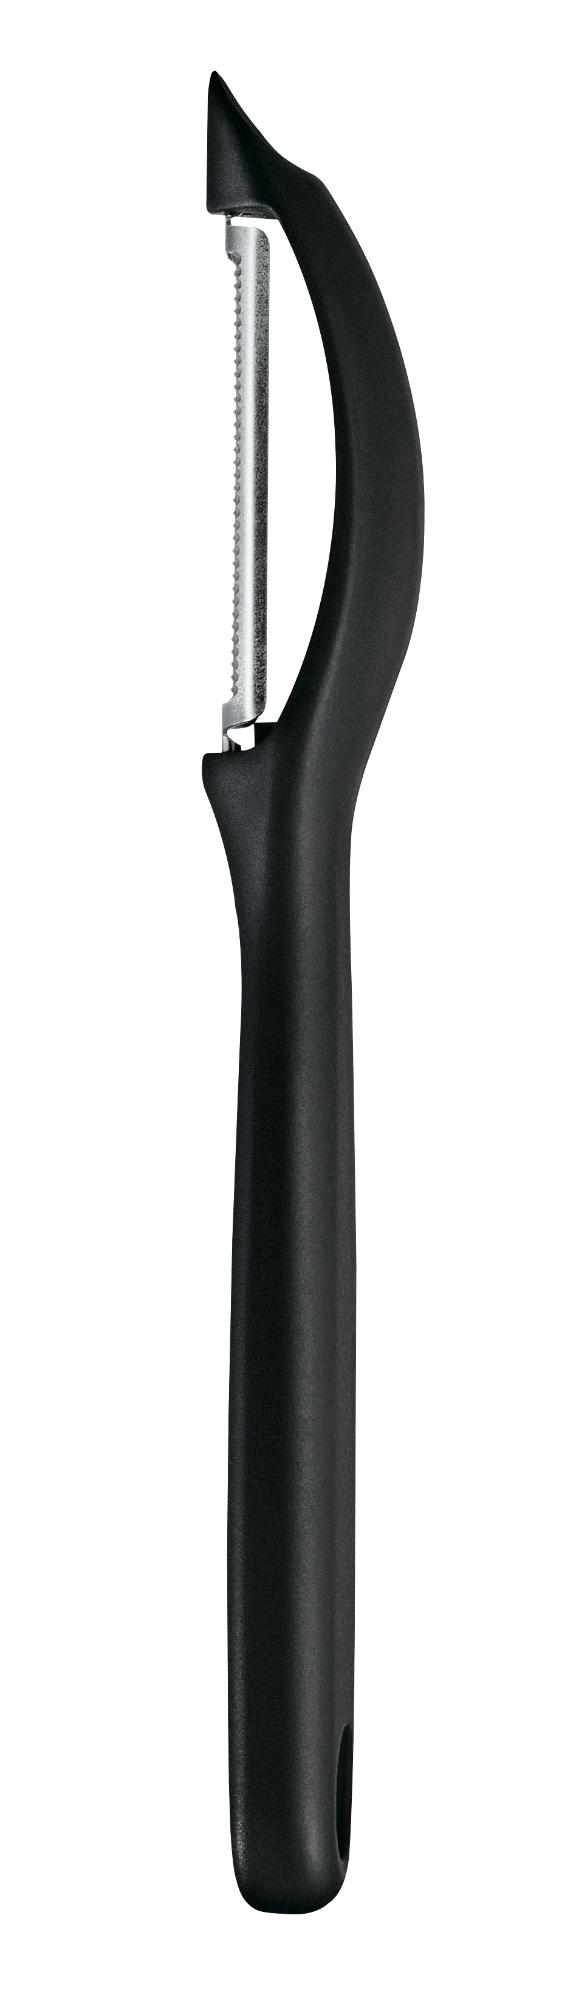 Swiss Classic universal peeler, serrated blade - black